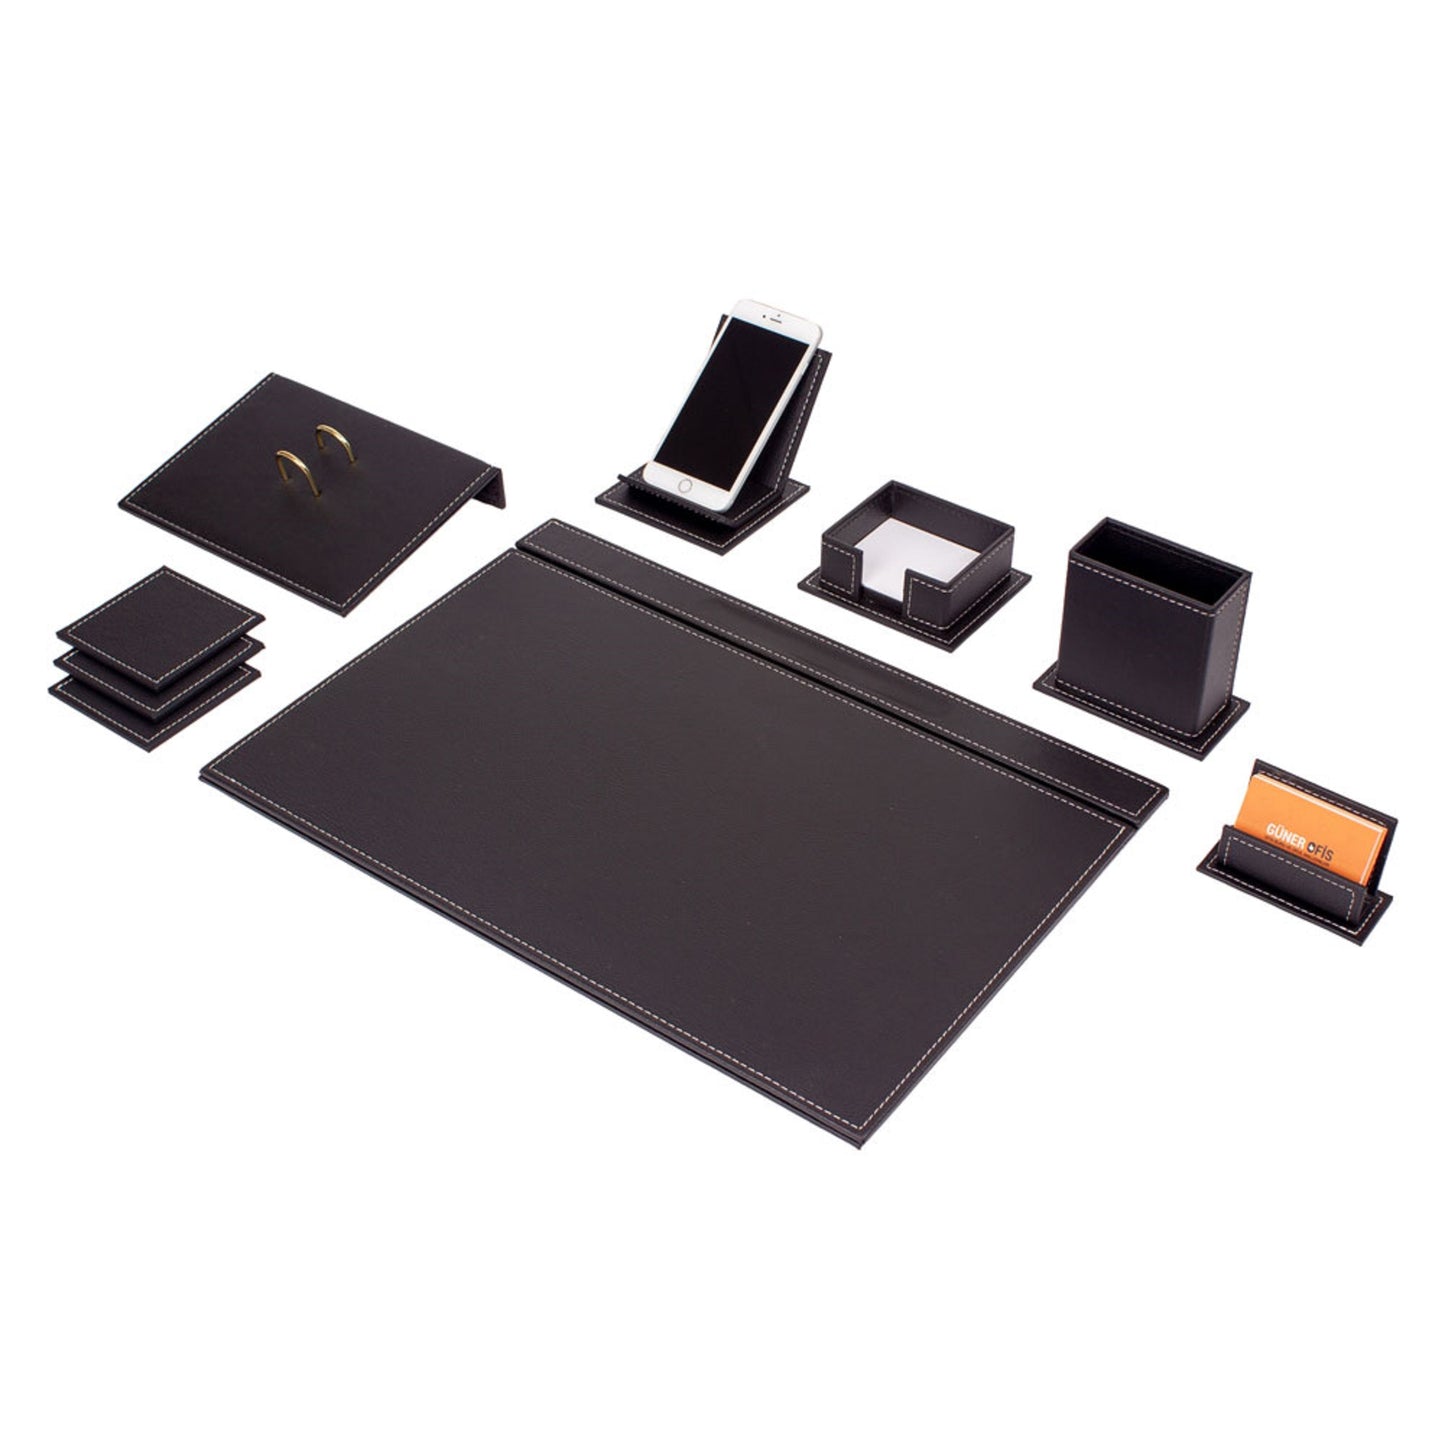 MOOG Luxury Desk Set 9 Pieces-Desk Office Accessories-Storage-Desk Organizers And Accessories-Office Desk Accessories-Desk Organizer Set-Desk Pads & Blotters - 9 PCS